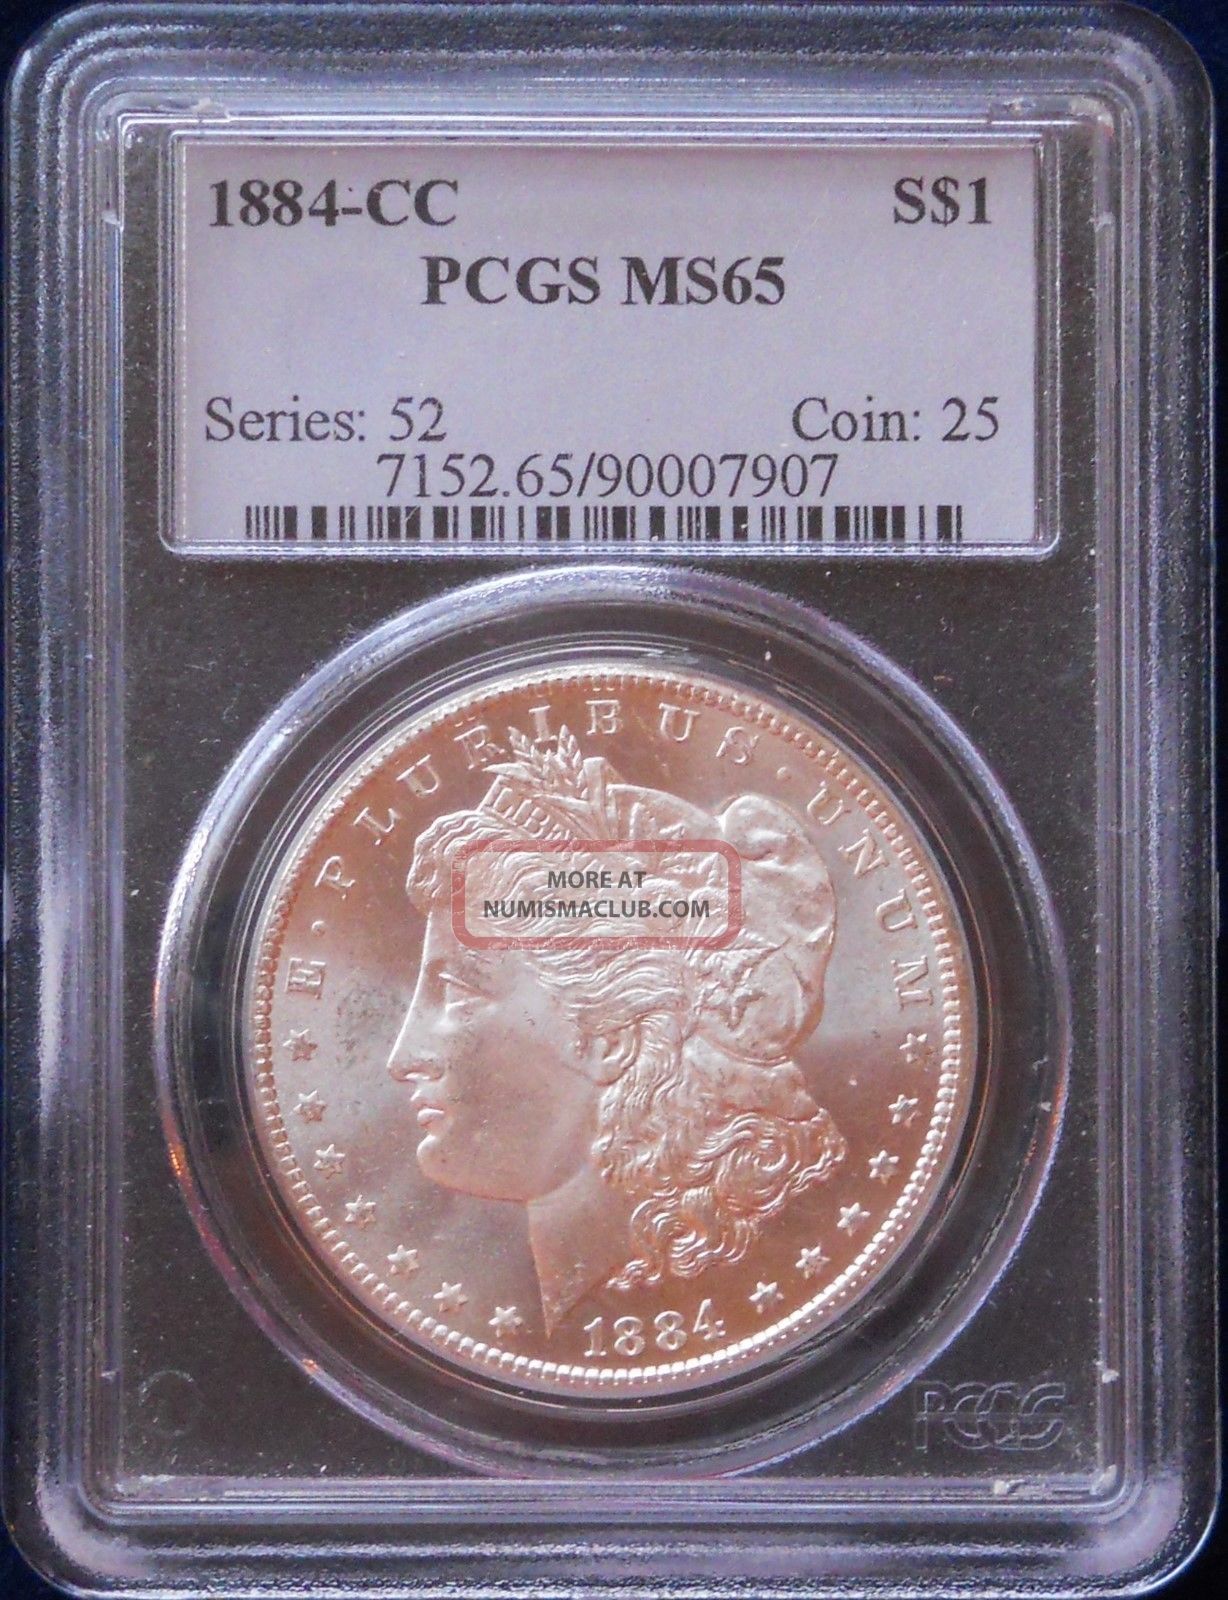 1884 - Cc Morgan Silver Dollar Graded Pcgs Ms65